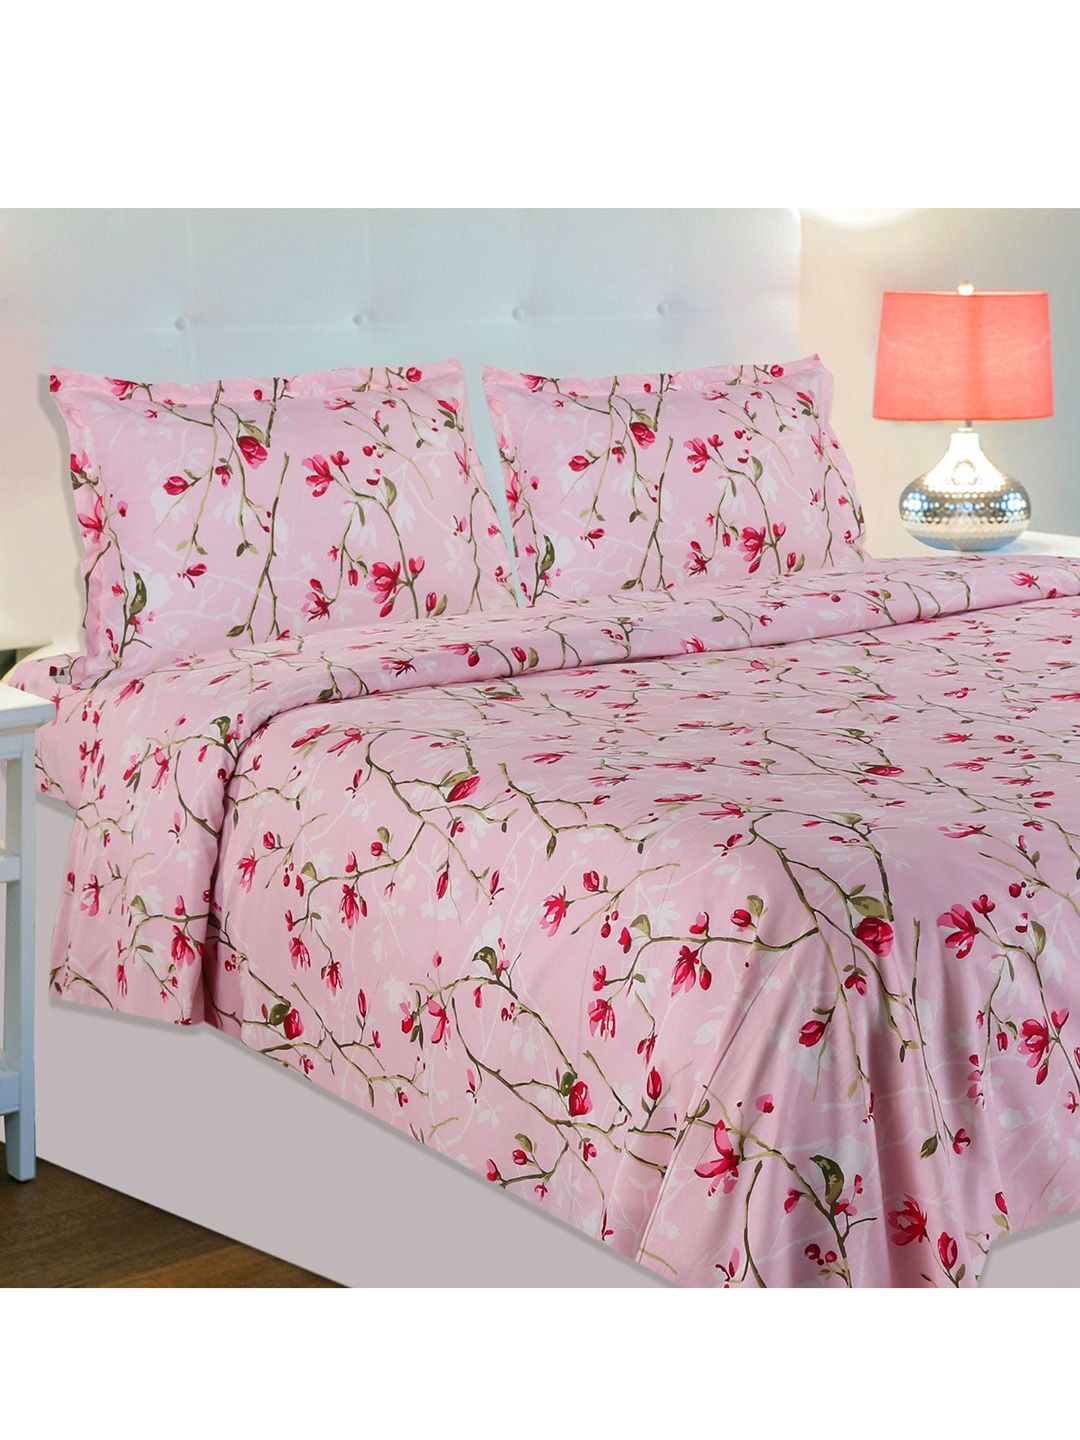 haus & kinder Unisex Pink Bedsheets Price in India